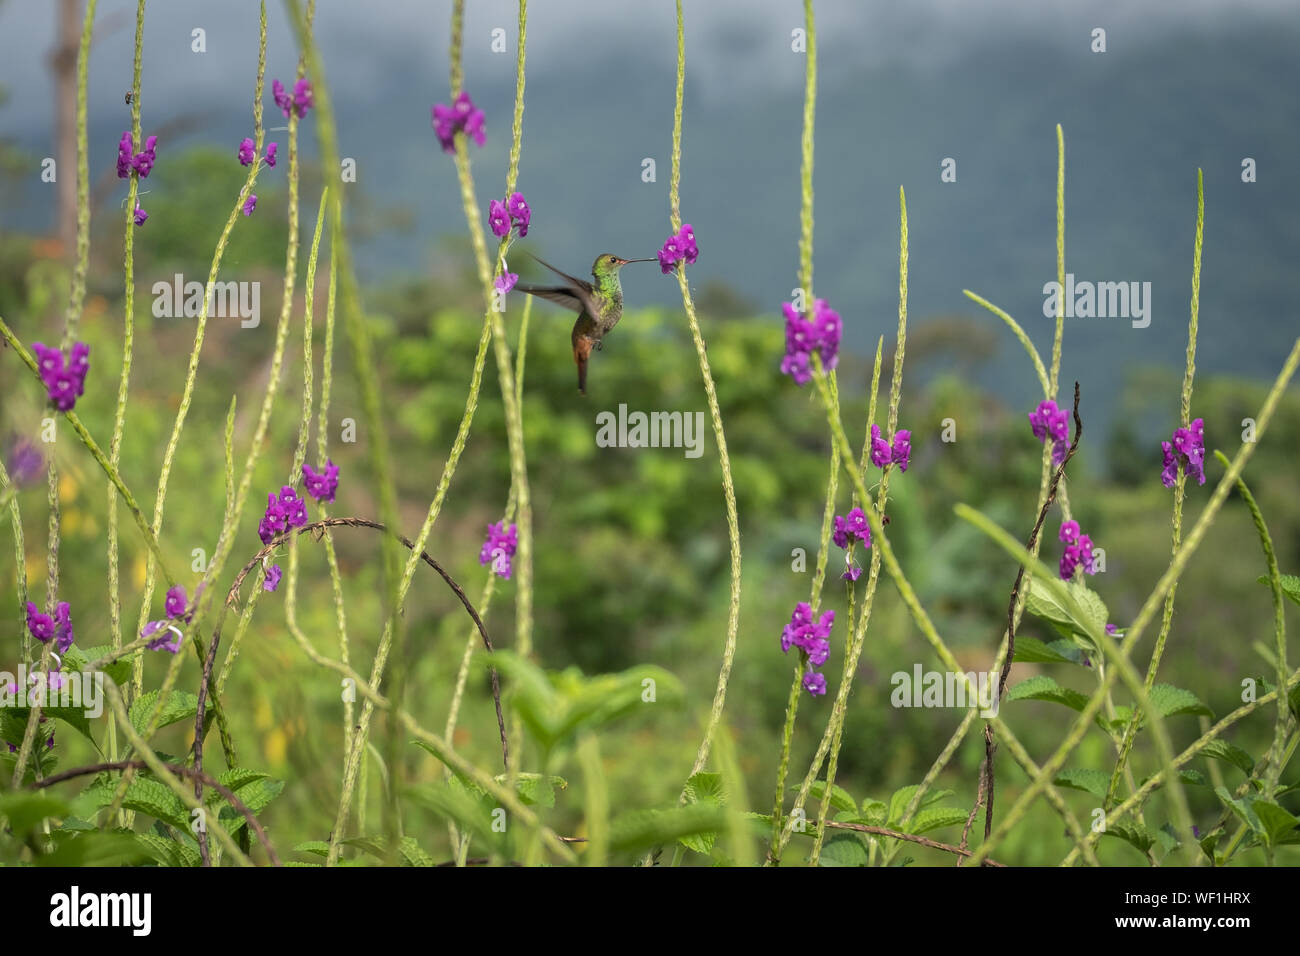 Hummingbird, Costa Rica Stock Photo